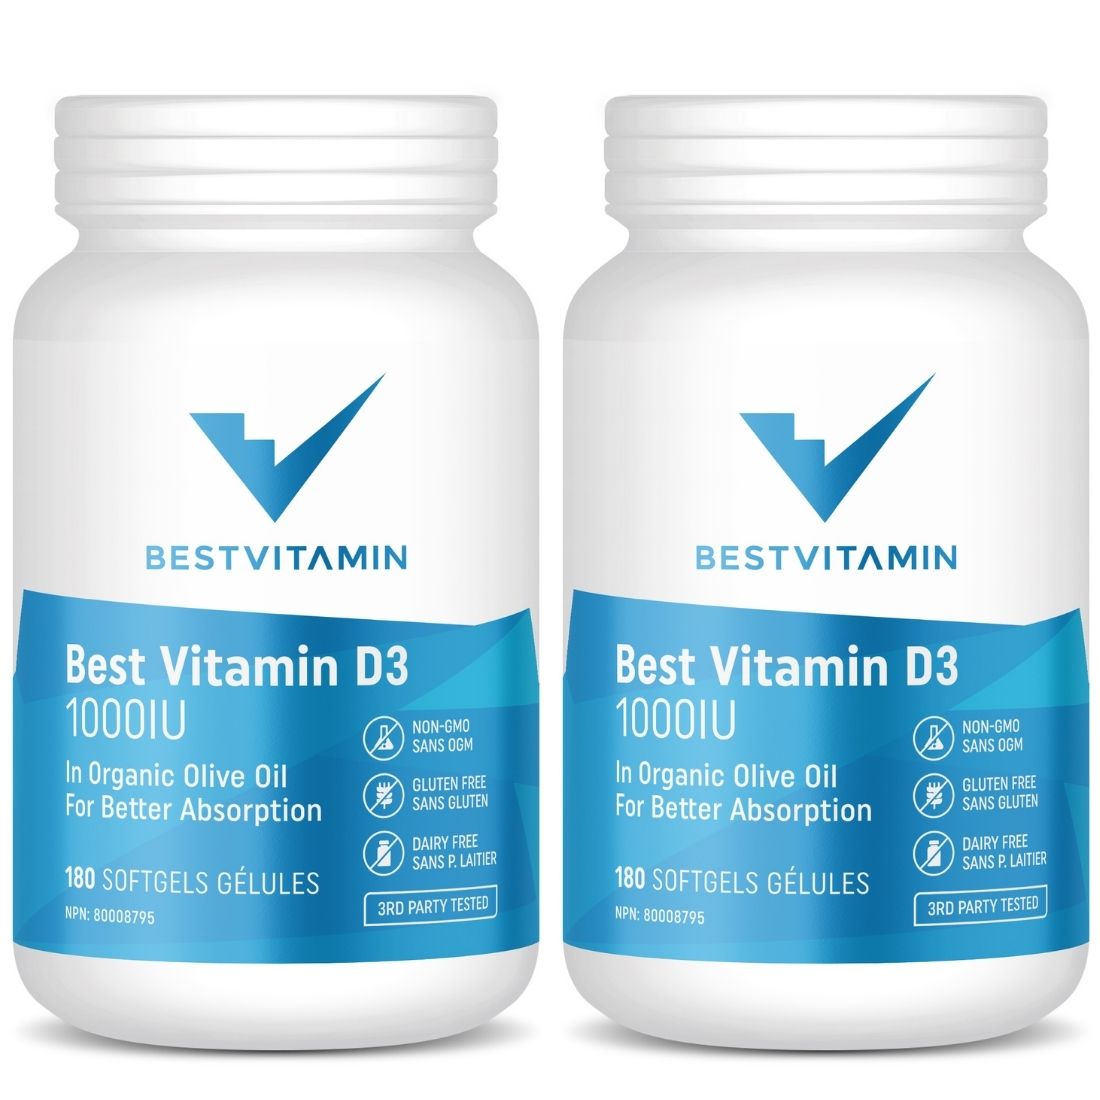 BestVitamin Best Vitamin D3 1000IU Softgels (In Organic Olive Oil For Better Absorption)